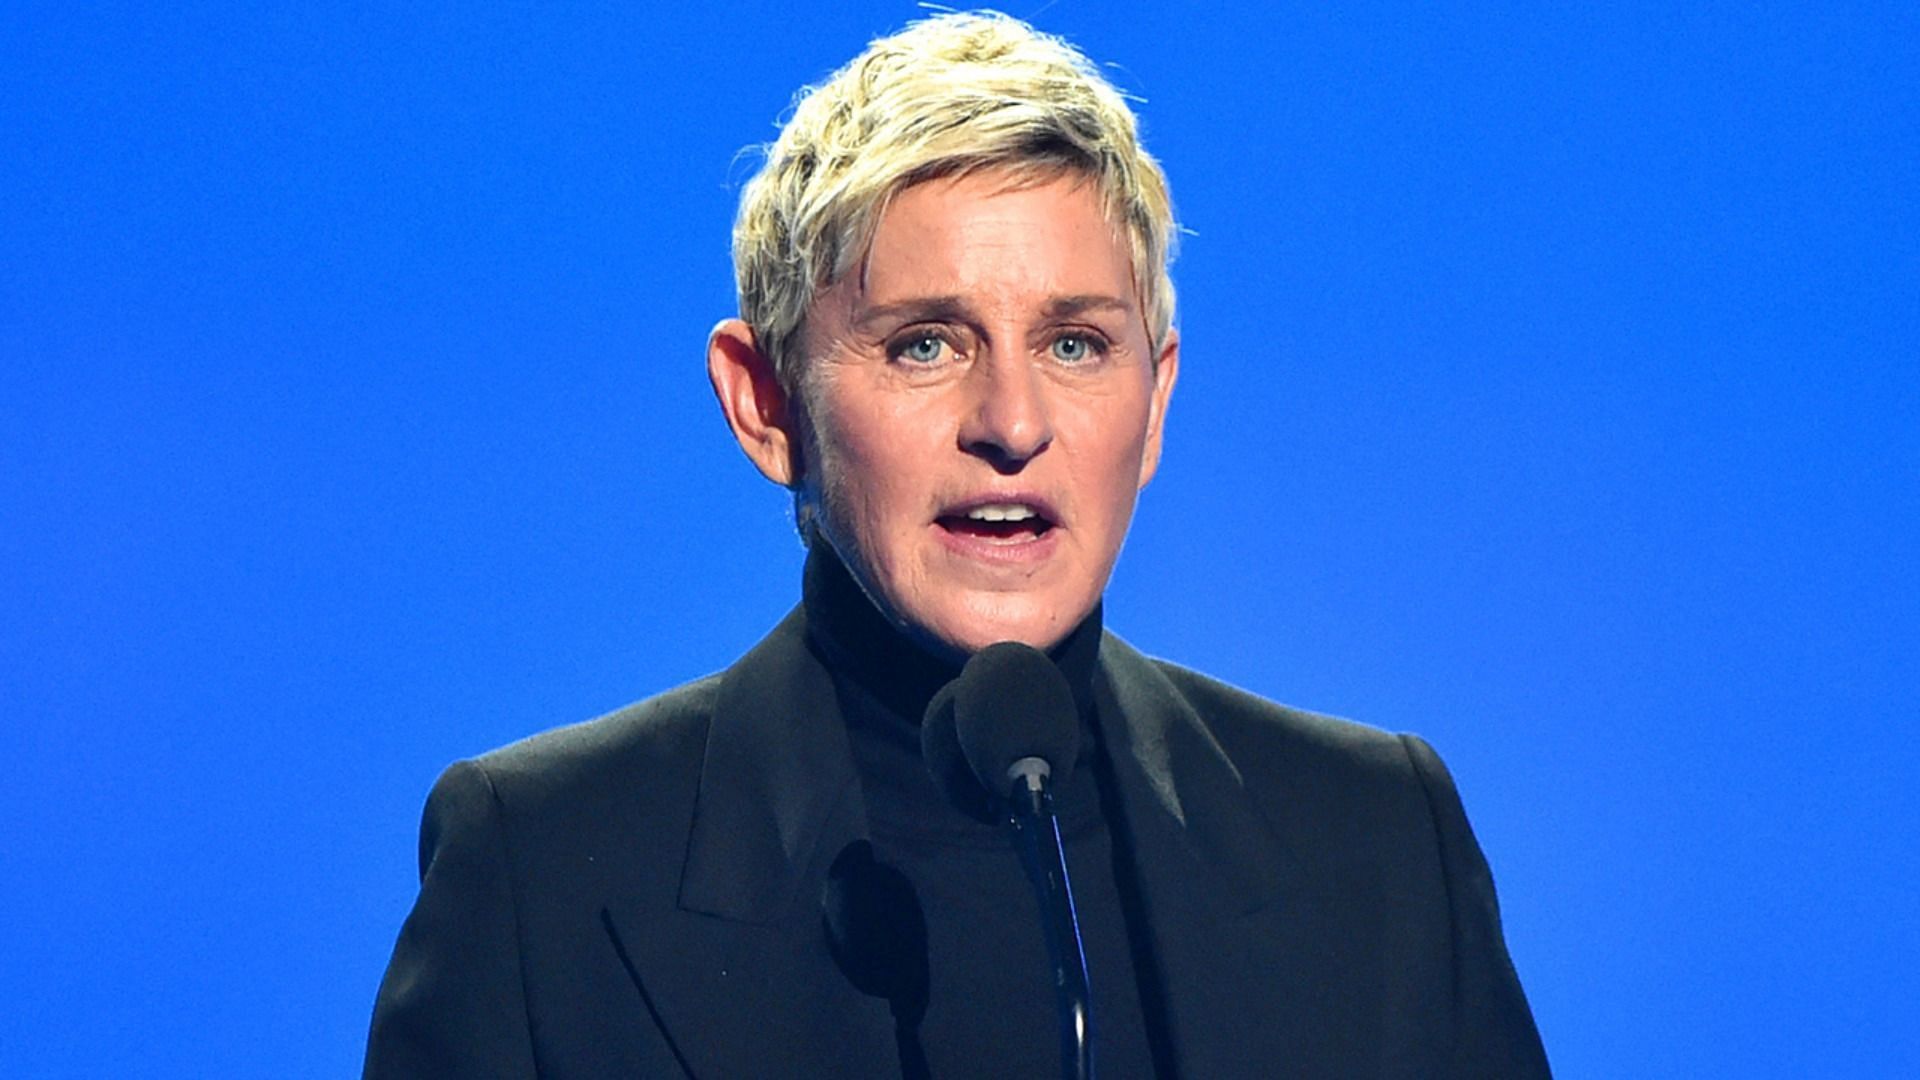 Ellen DeGeneres started hosting her talk show in 2003 (Image via Getty Images/Alberto Rodriguez)